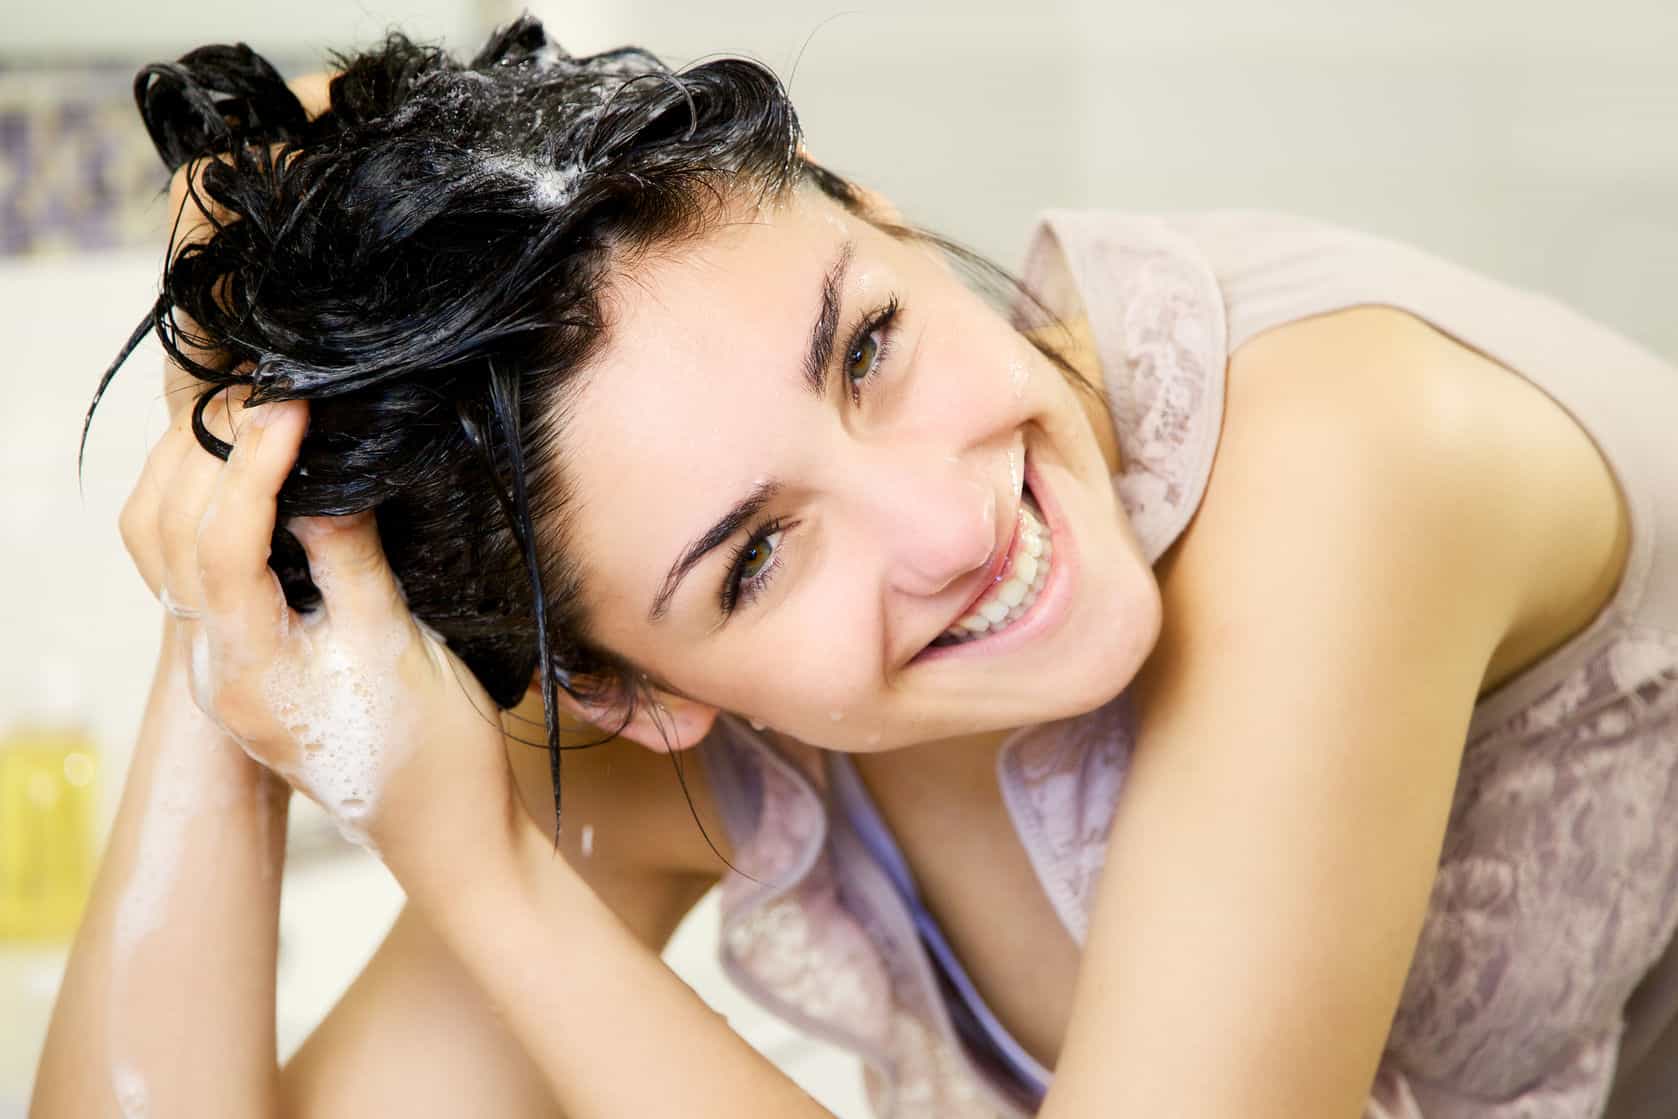 40657969 - cute girl in bathroom washing hair with shampoo